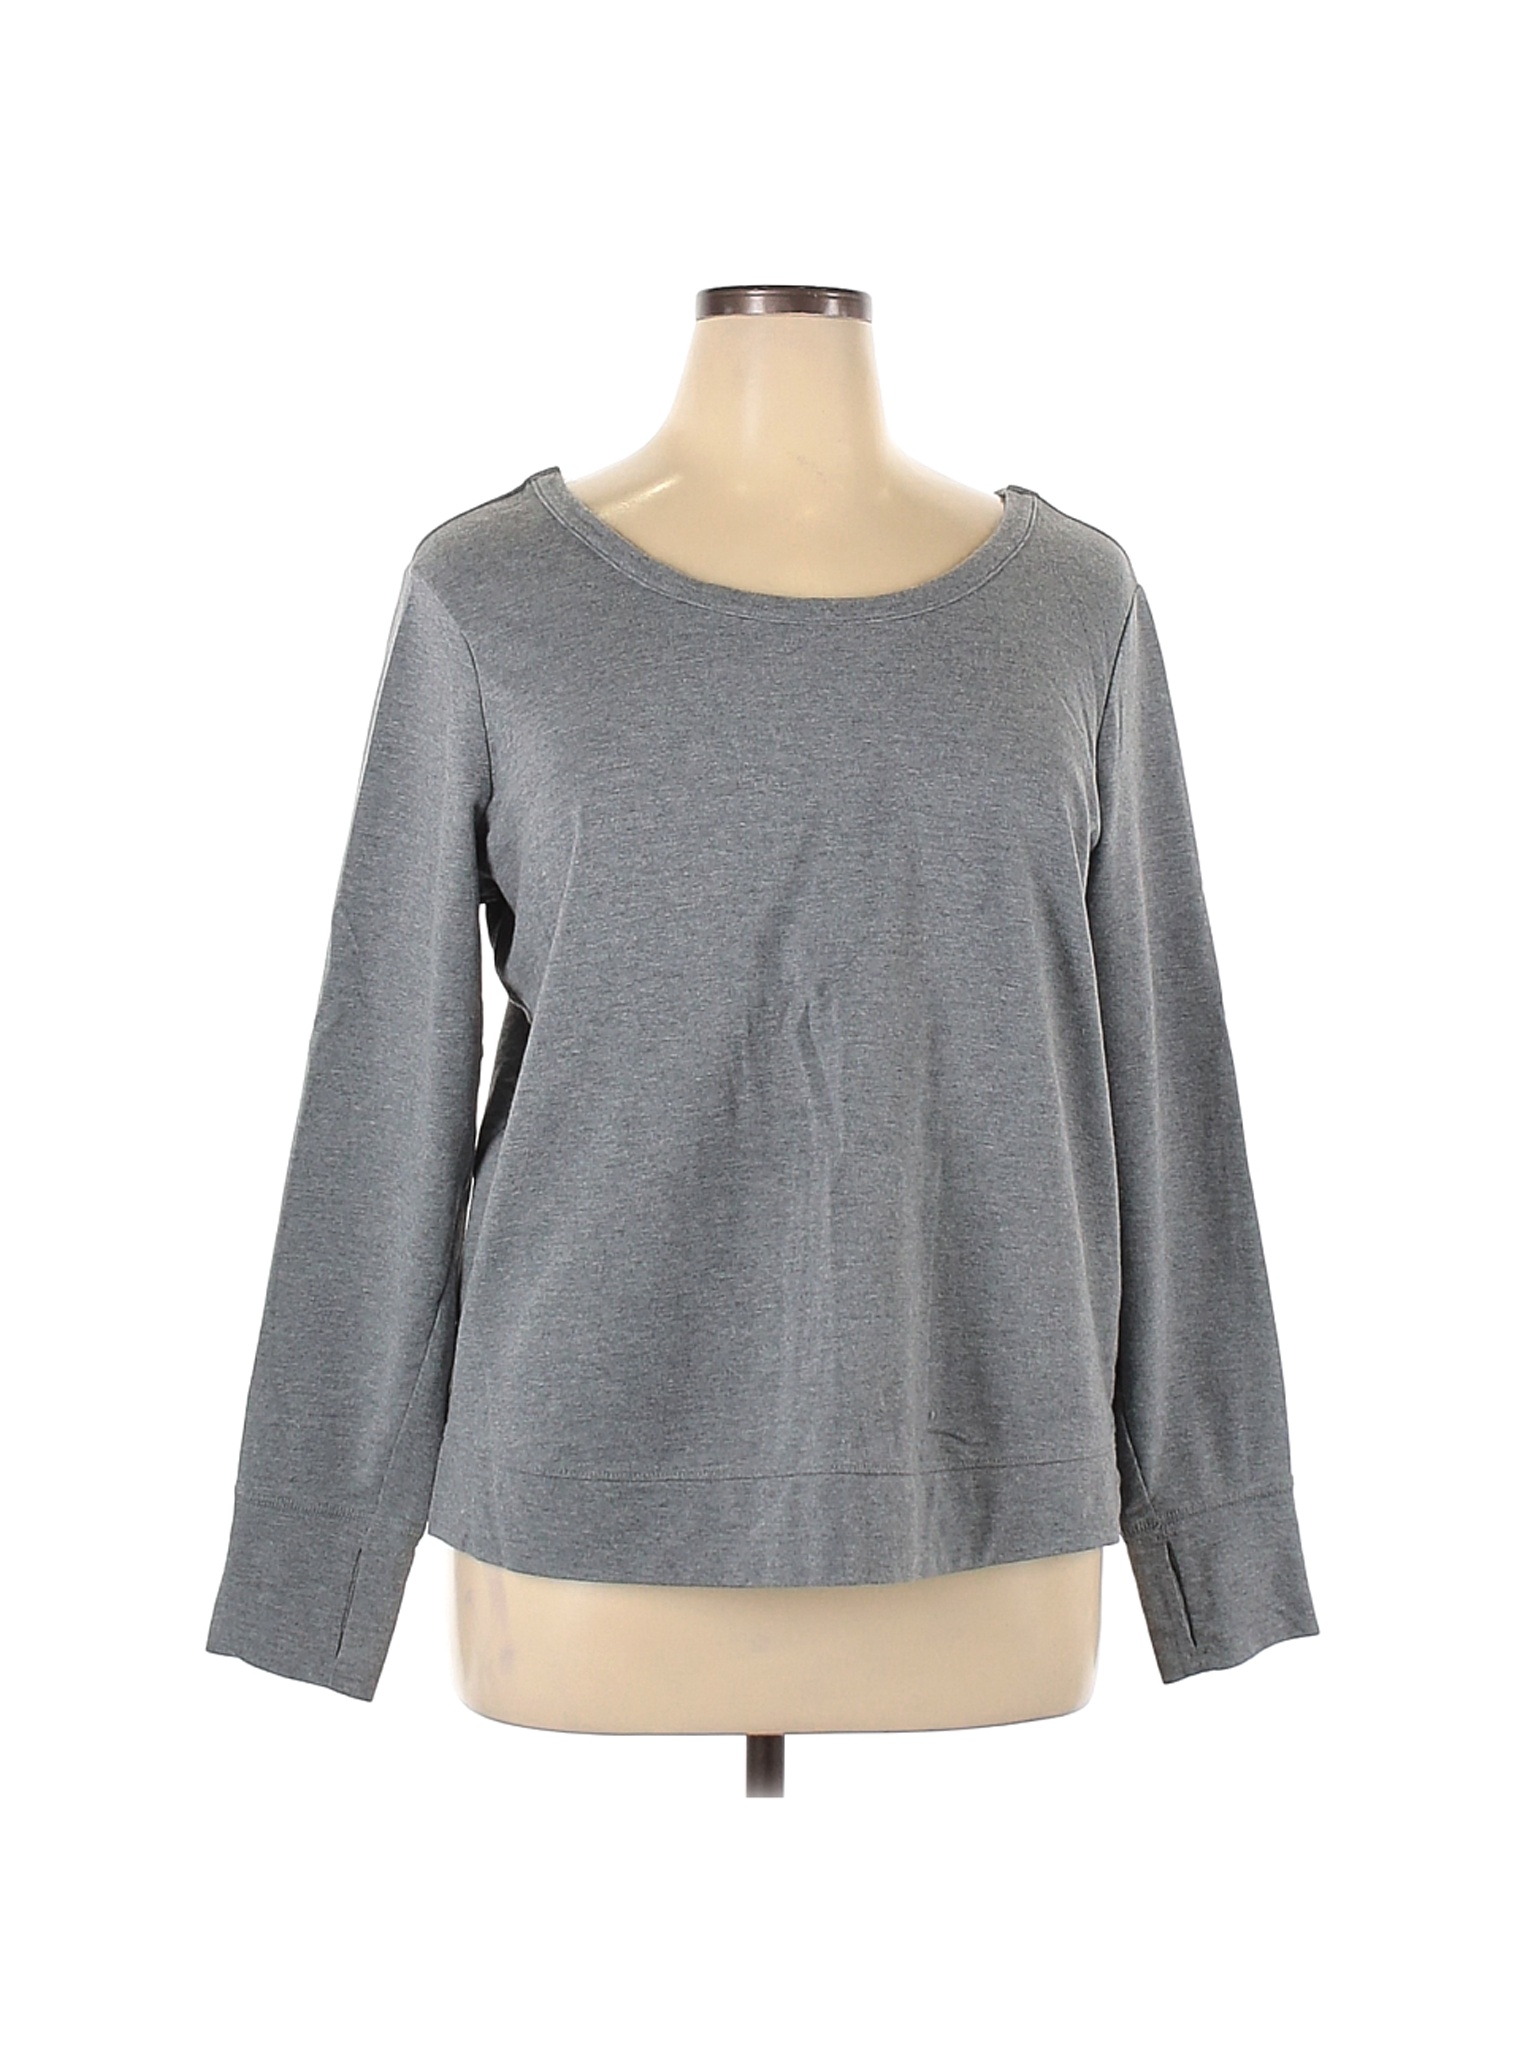 Active by Old Navy Women Gray Sweatshirt XL | eBay